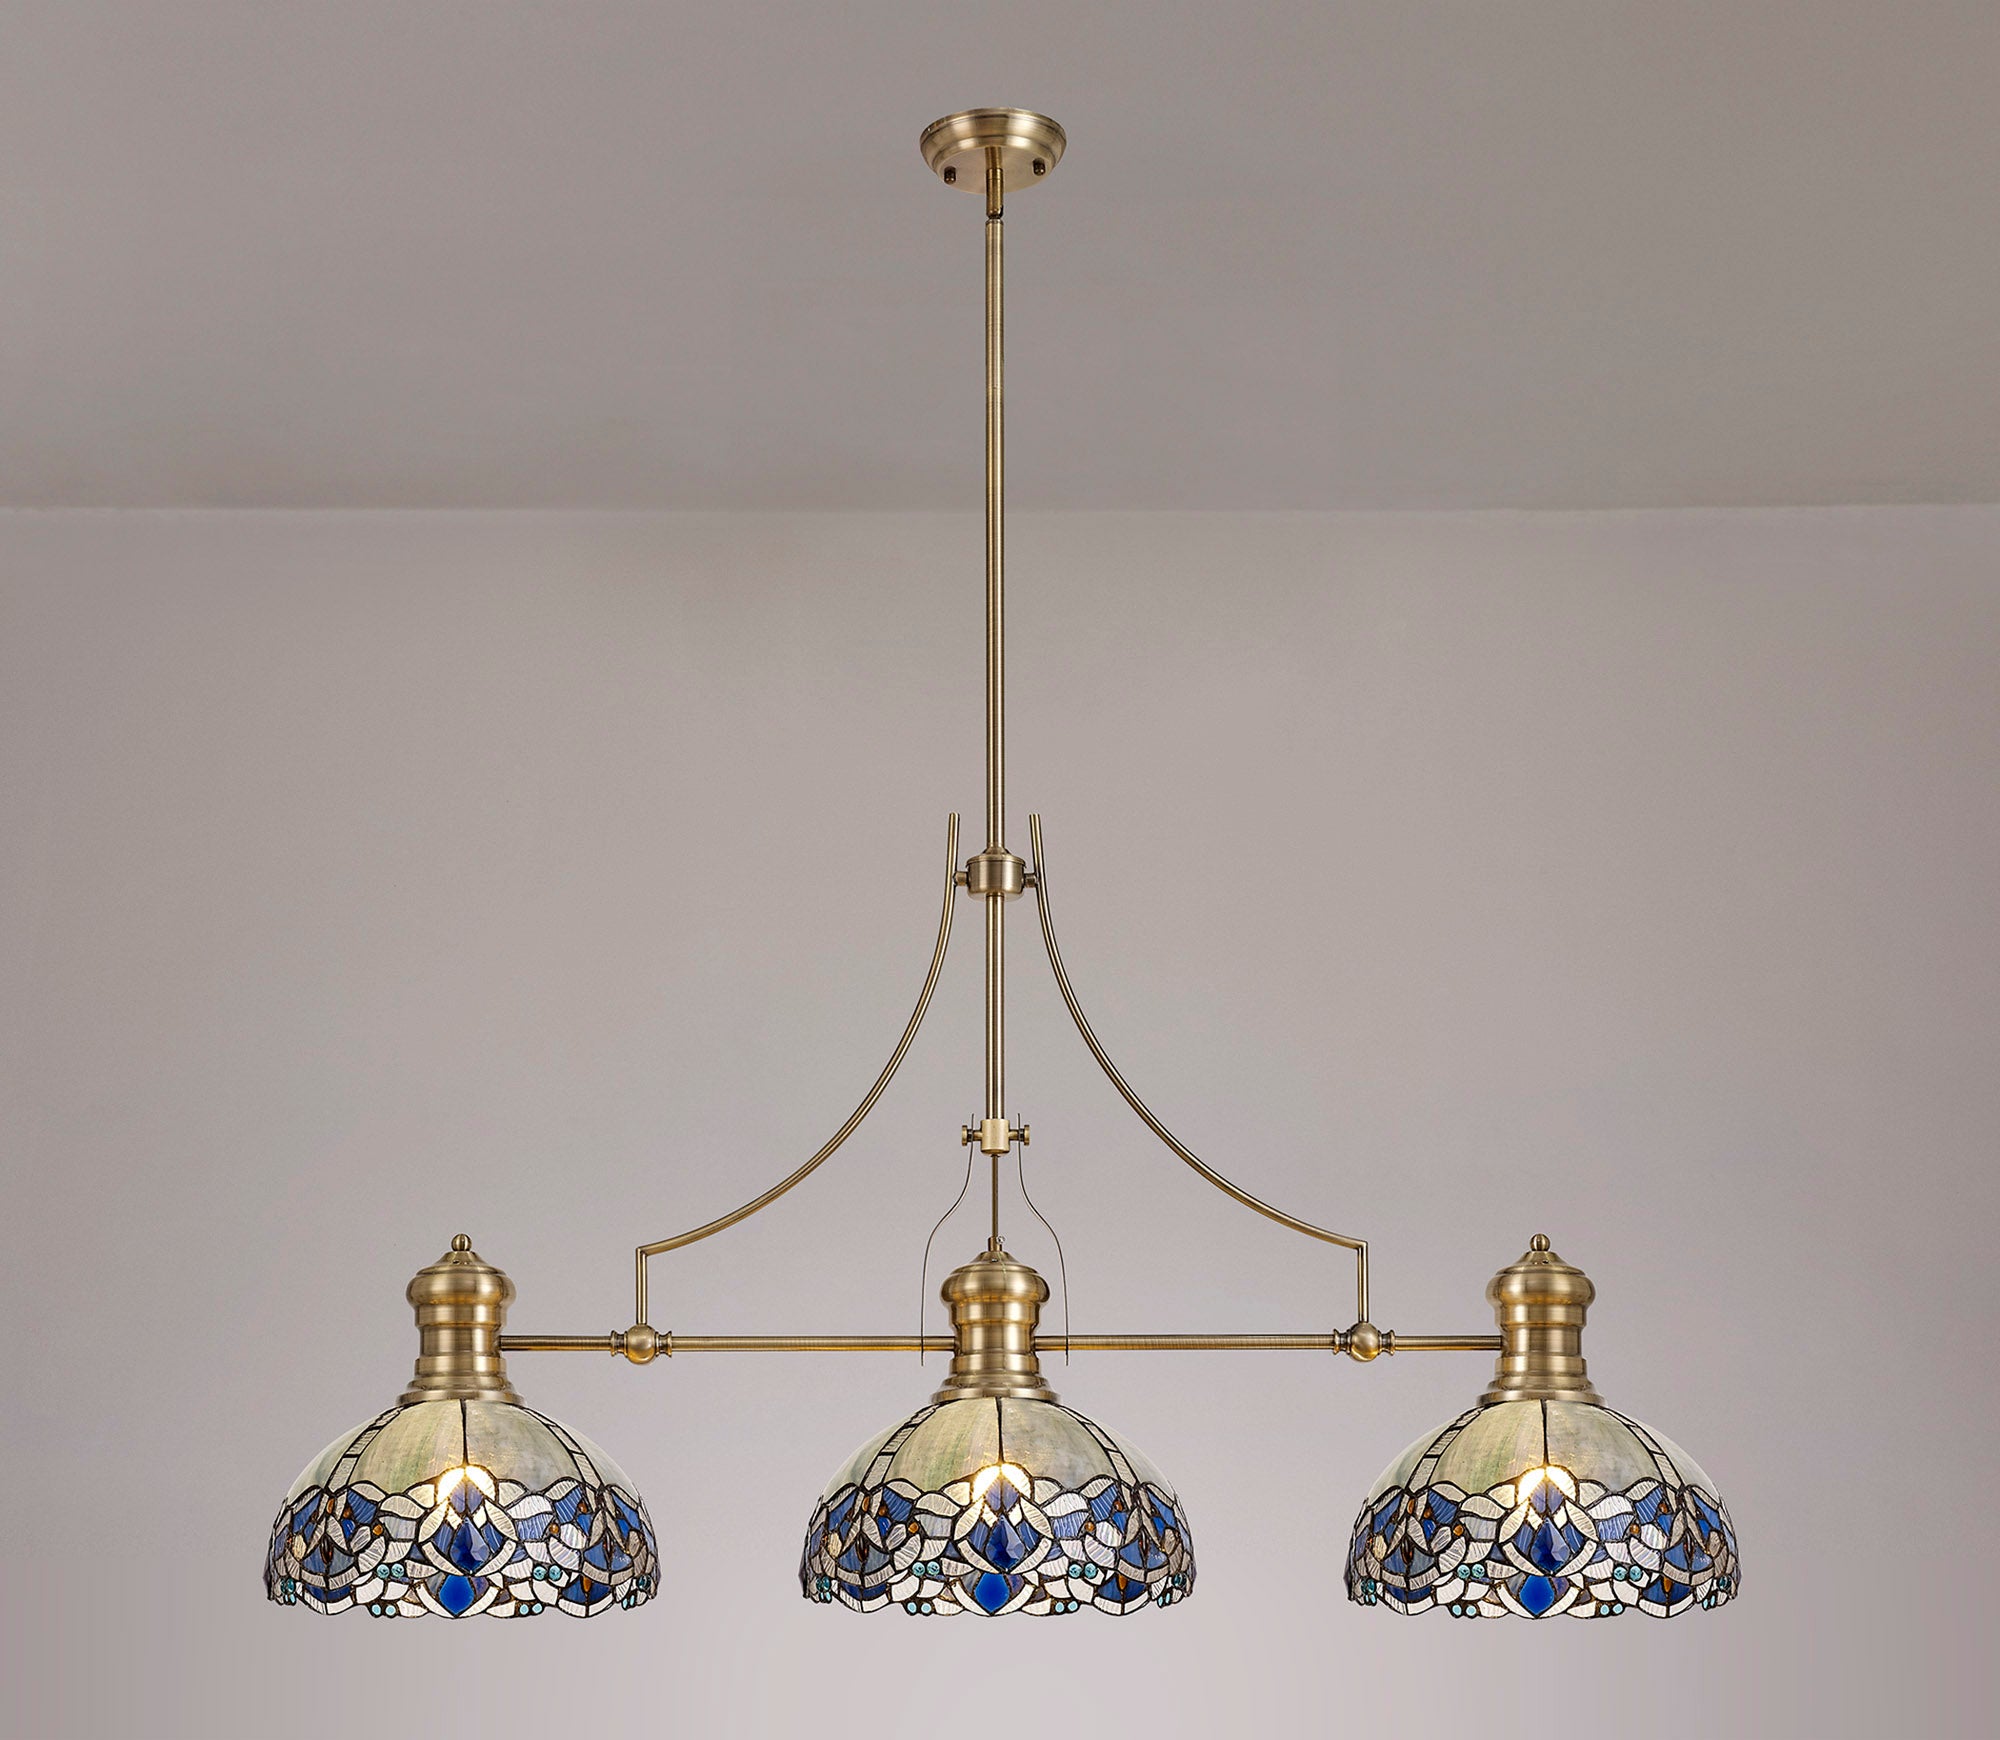 Docker, Oseki 3 Light Linear Pendant E27 With 30cm Tiffany Shade, Antique Brass, Blue, Clear Crystal